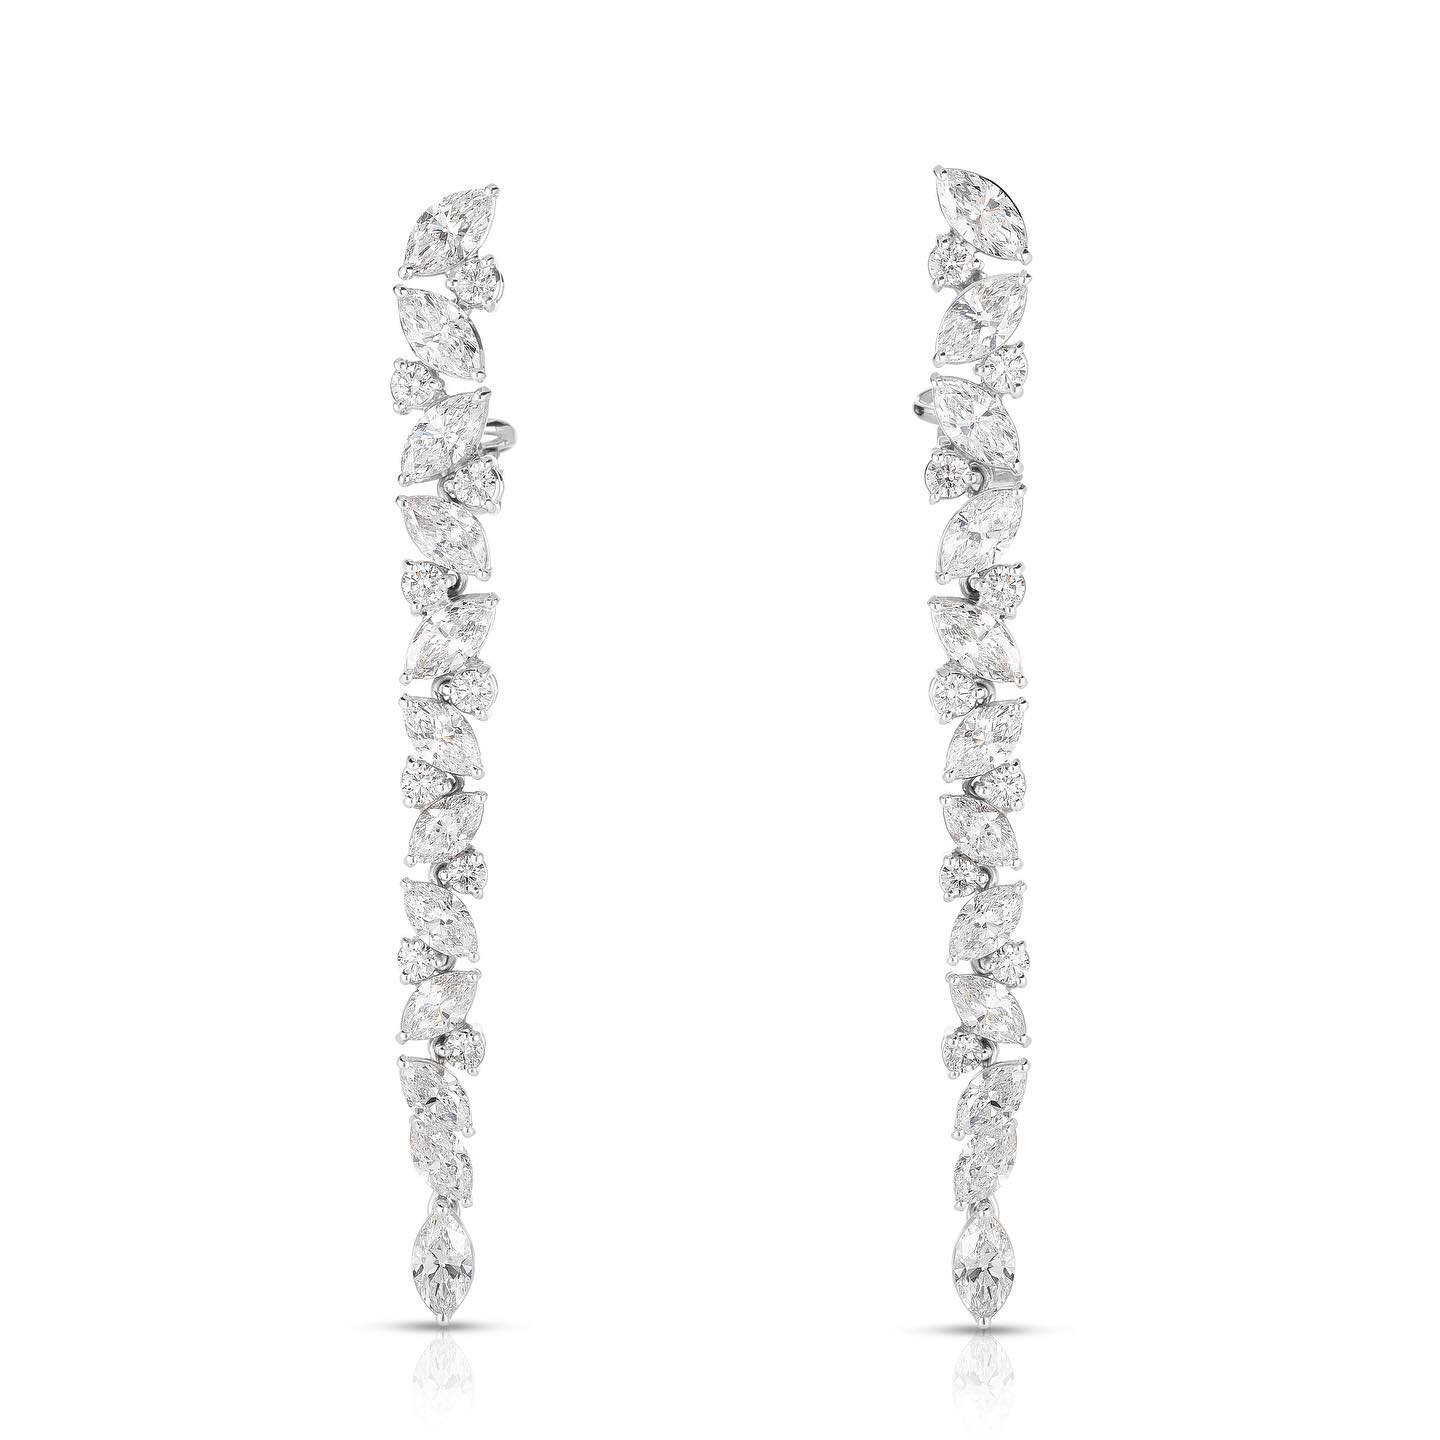 Cicada Diamond Drop Earrings in Platinum, worn by @kellyrowland. Designed &amp; Made by Cicada Jewelry in NYC.
.
.
.
.
#cicadajewelry #cicada #diamond #couture #luxurylifestyle #hautejoaillerie #earringsoftheday #highfashion #oneofakindjewelry #highj